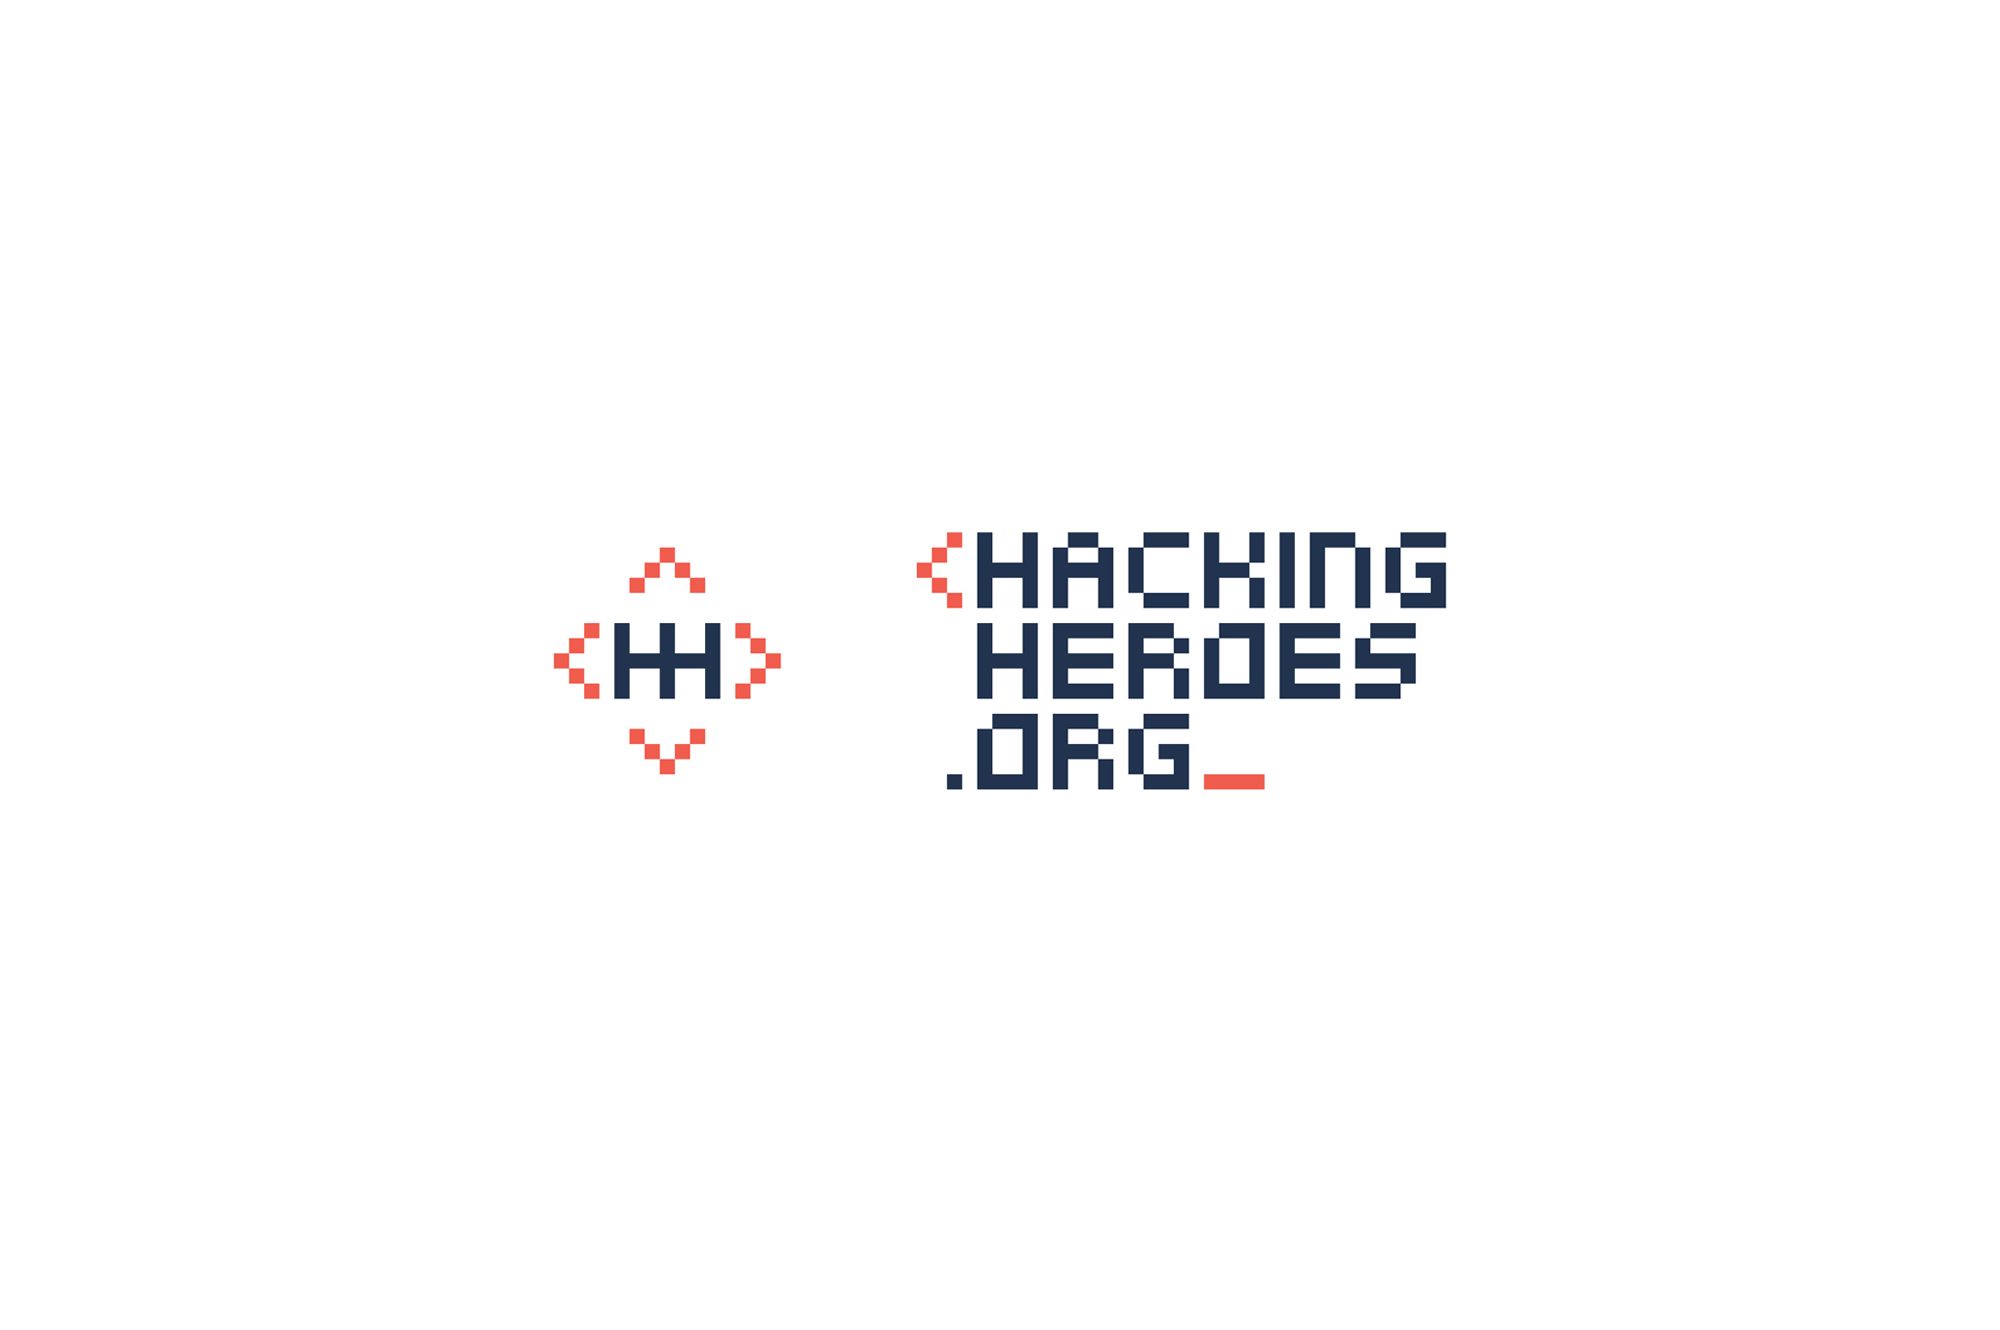 hackingheroes.org - logo